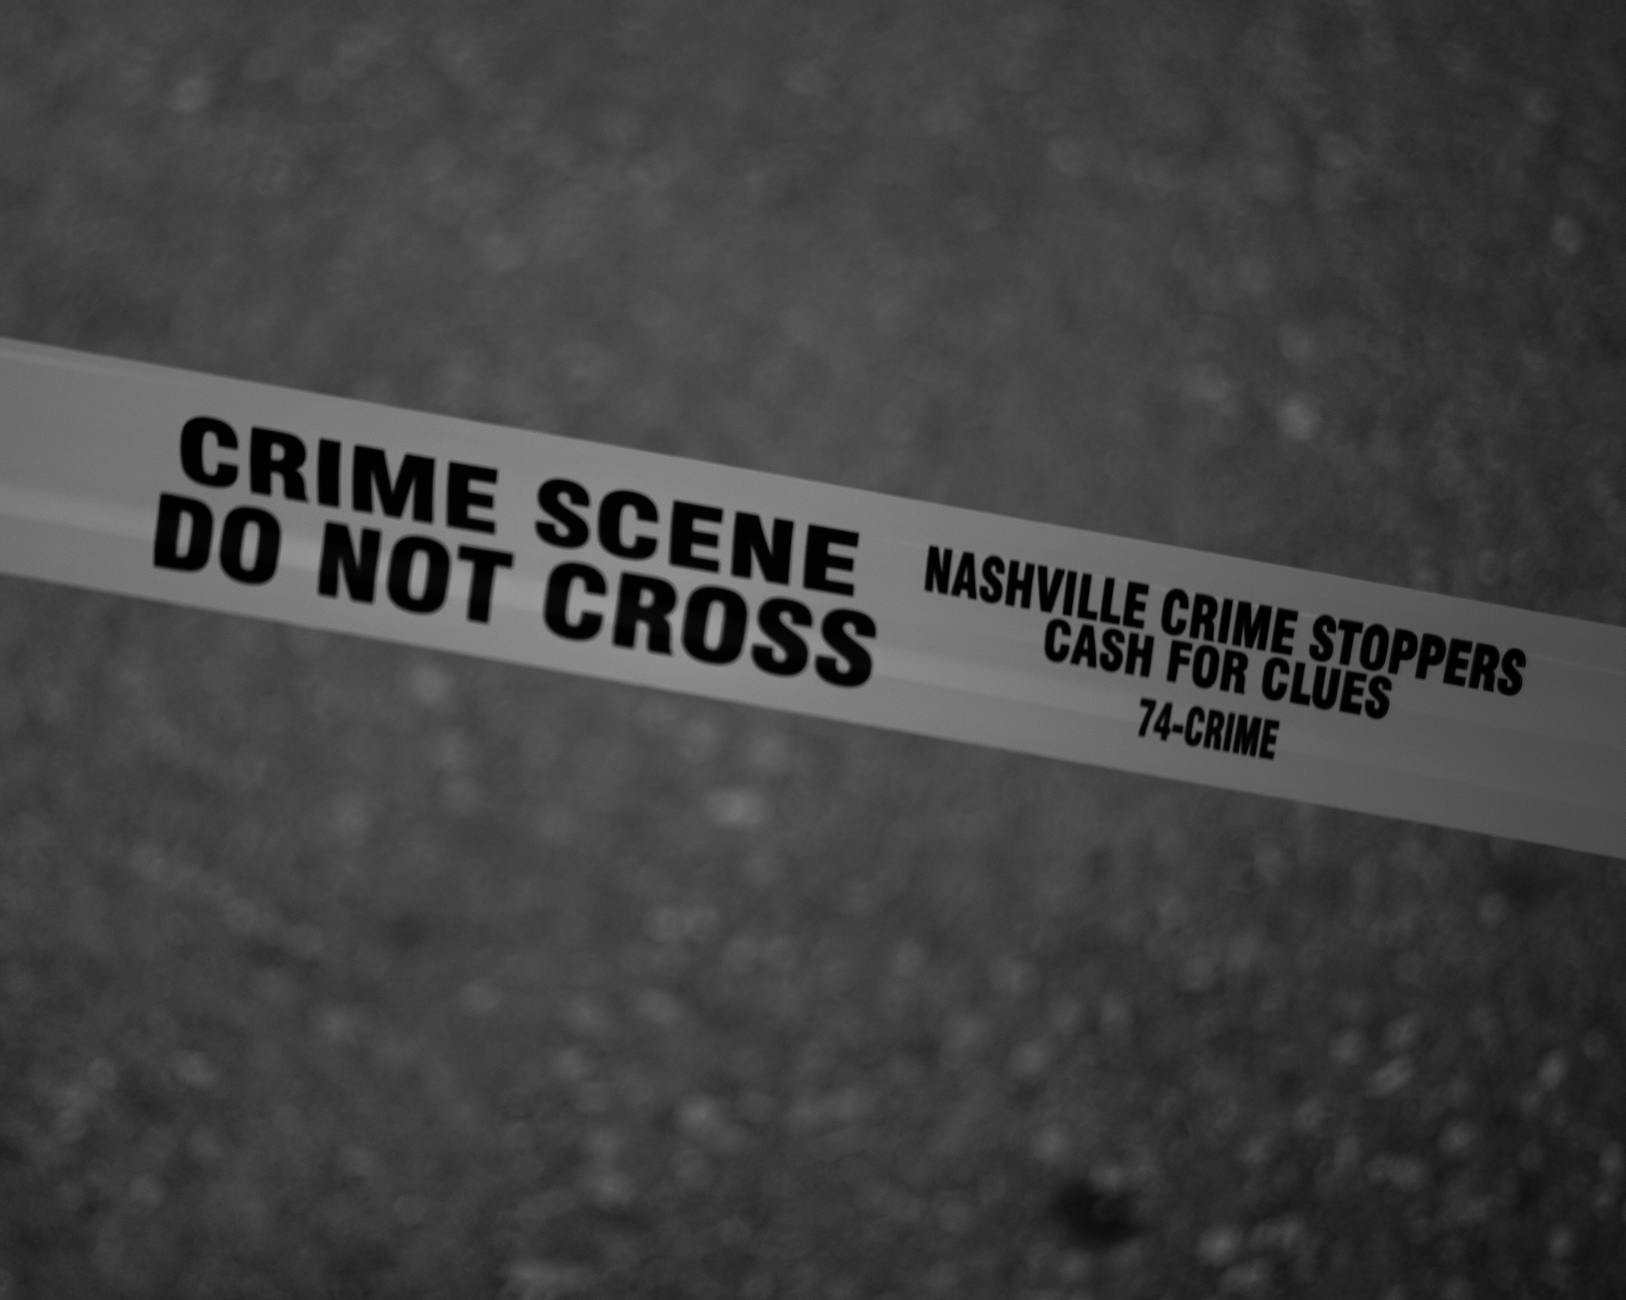 grayscale photo of crime scene do not cross tape